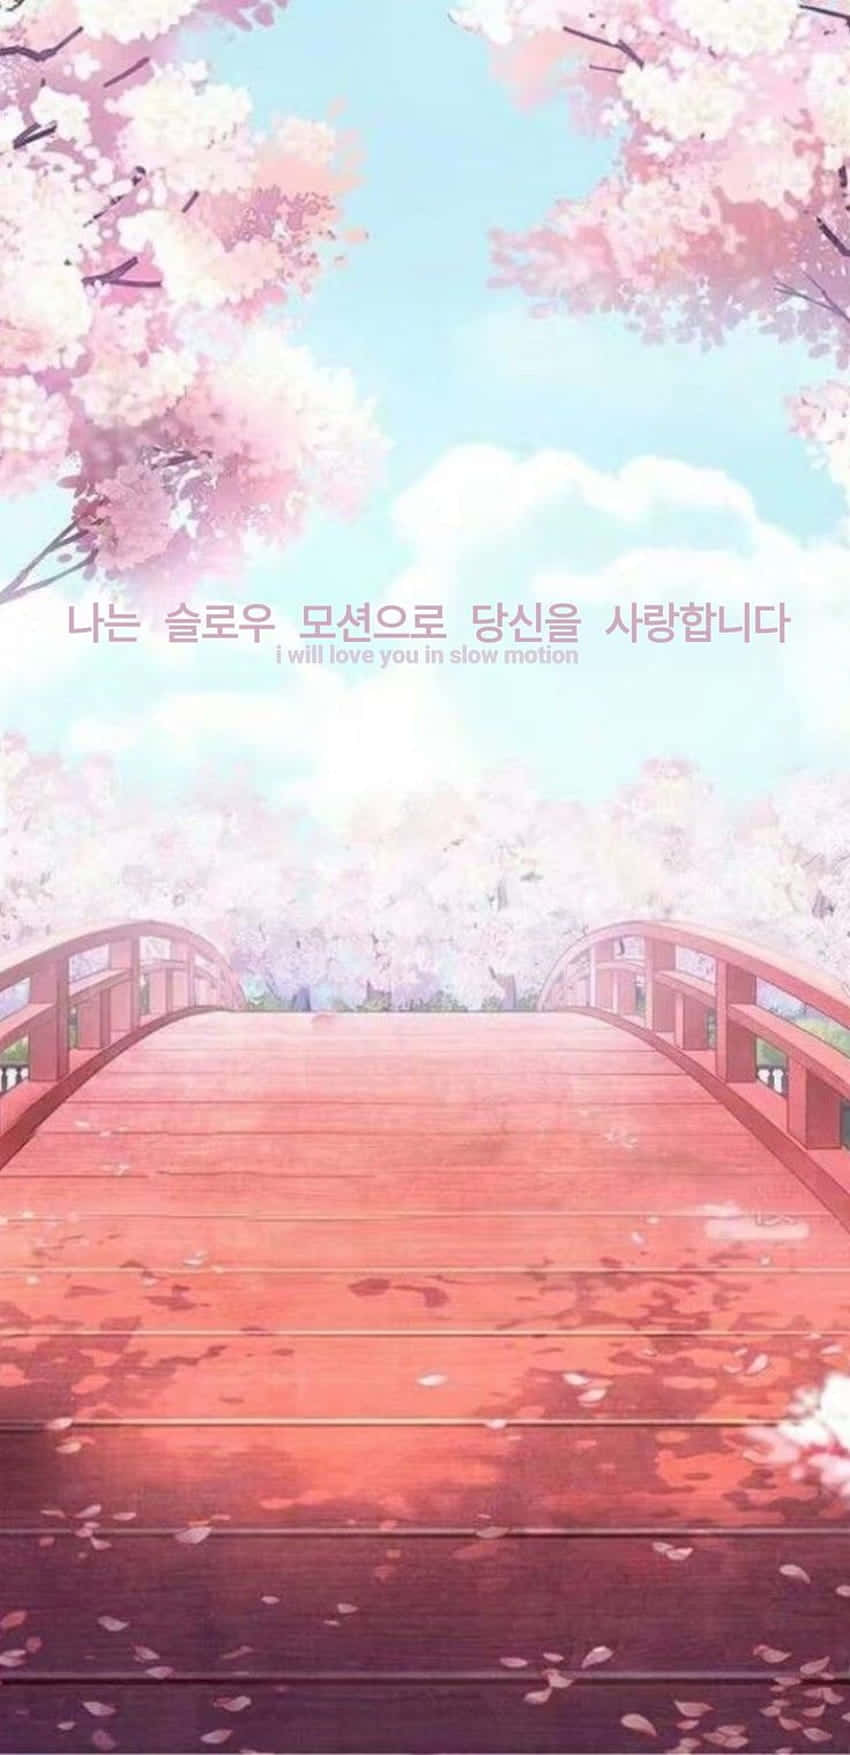 A Bridge With Pink Blossoms And A Bridge Wallpaper